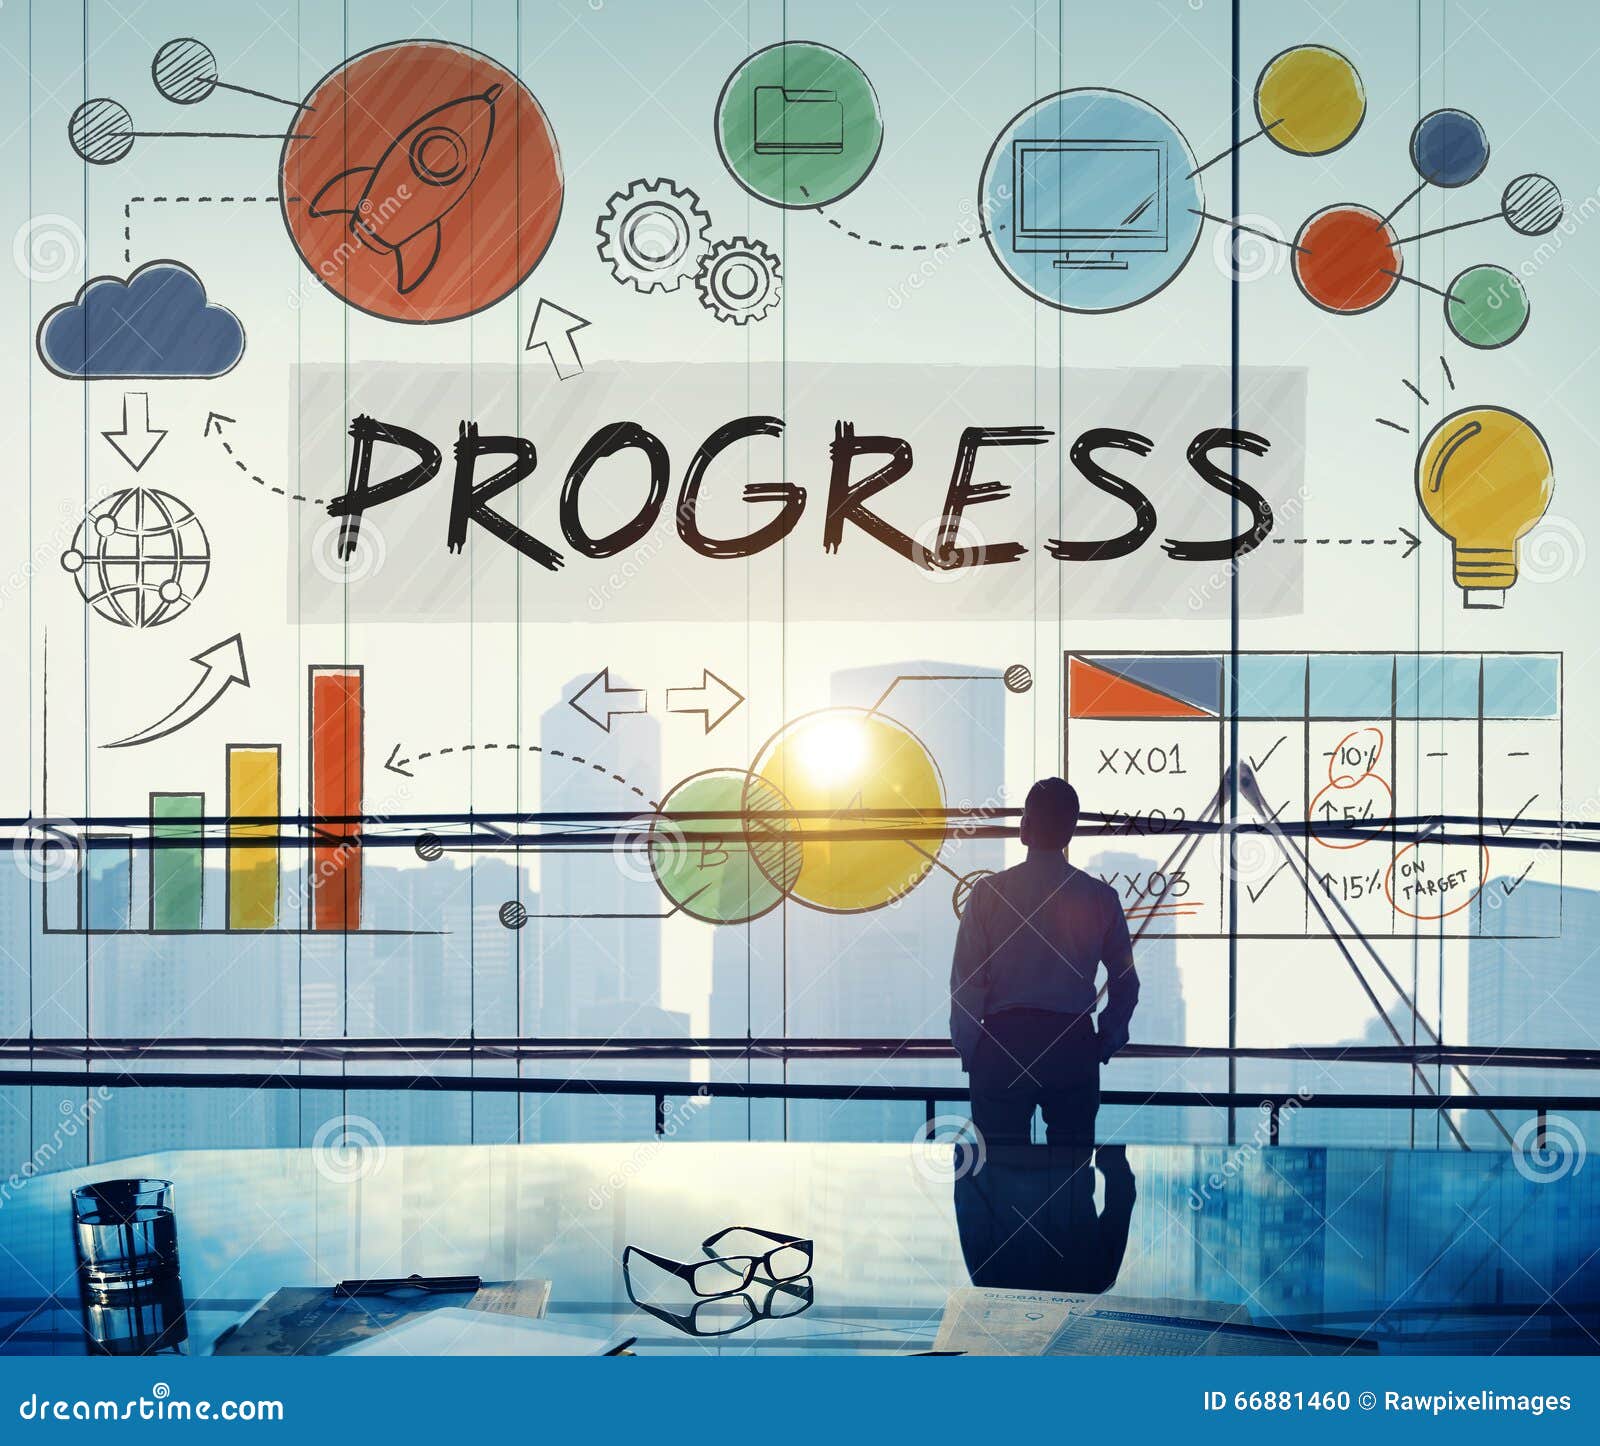 progress development growth innovation advancement concept